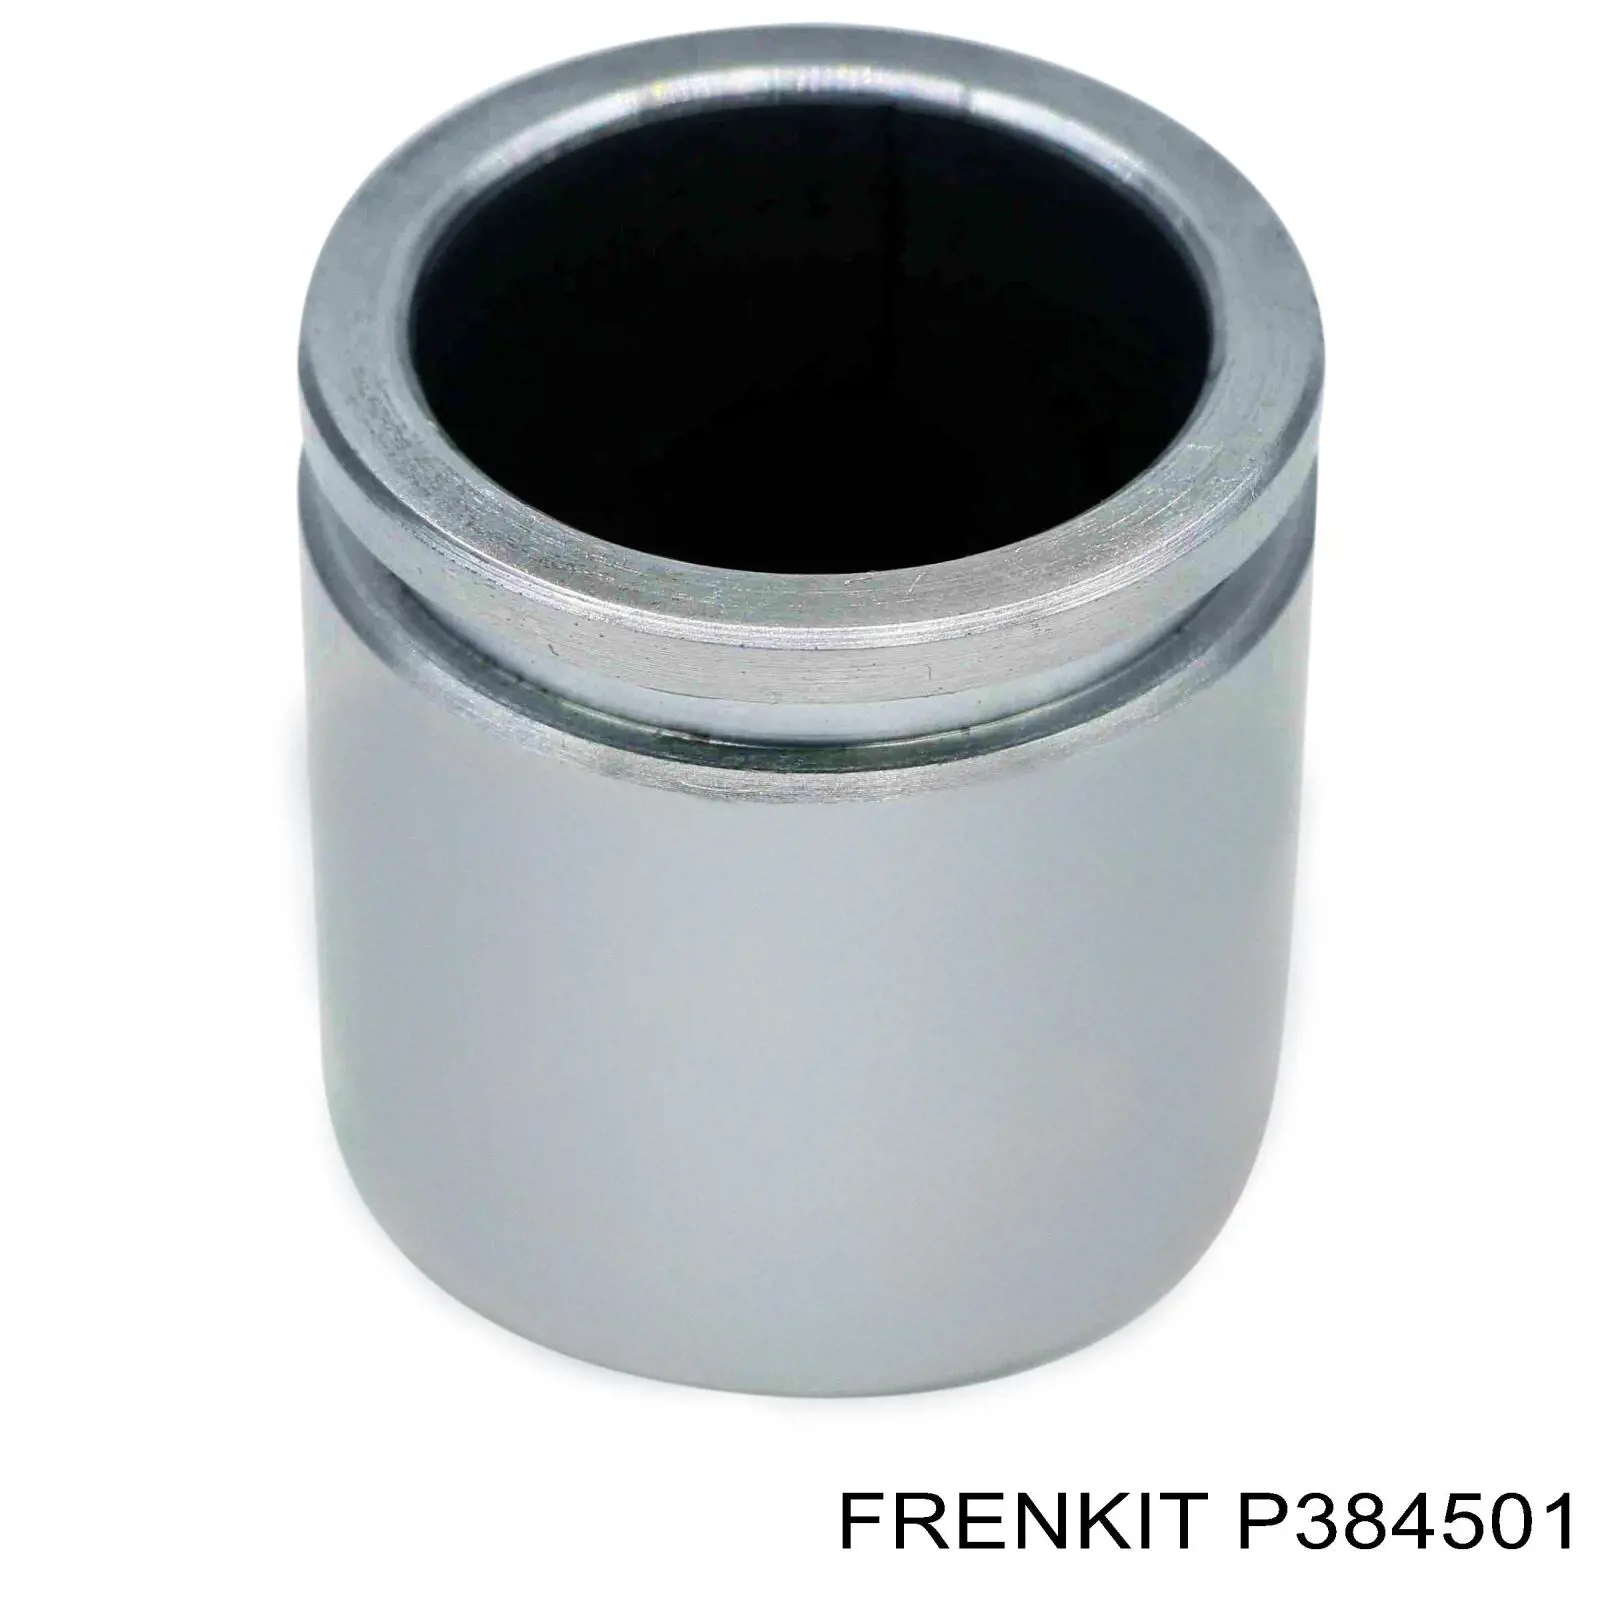 P384501 Frenkit поршень суппорта тормозного заднего